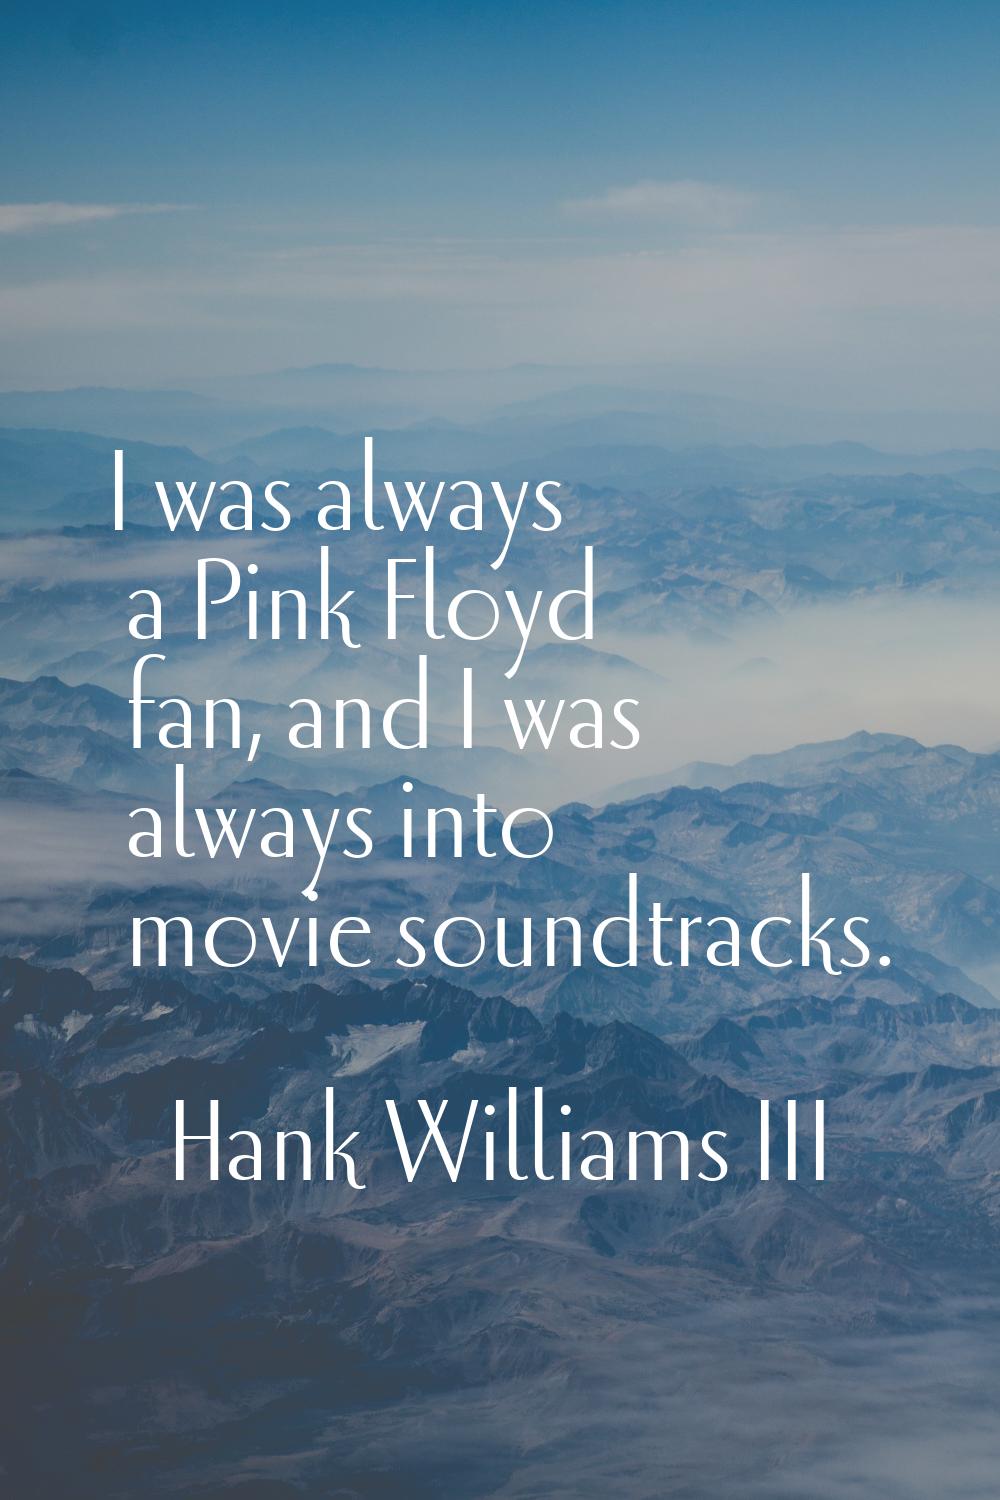 I was always a Pink Floyd fan, and I was always into movie soundtracks.